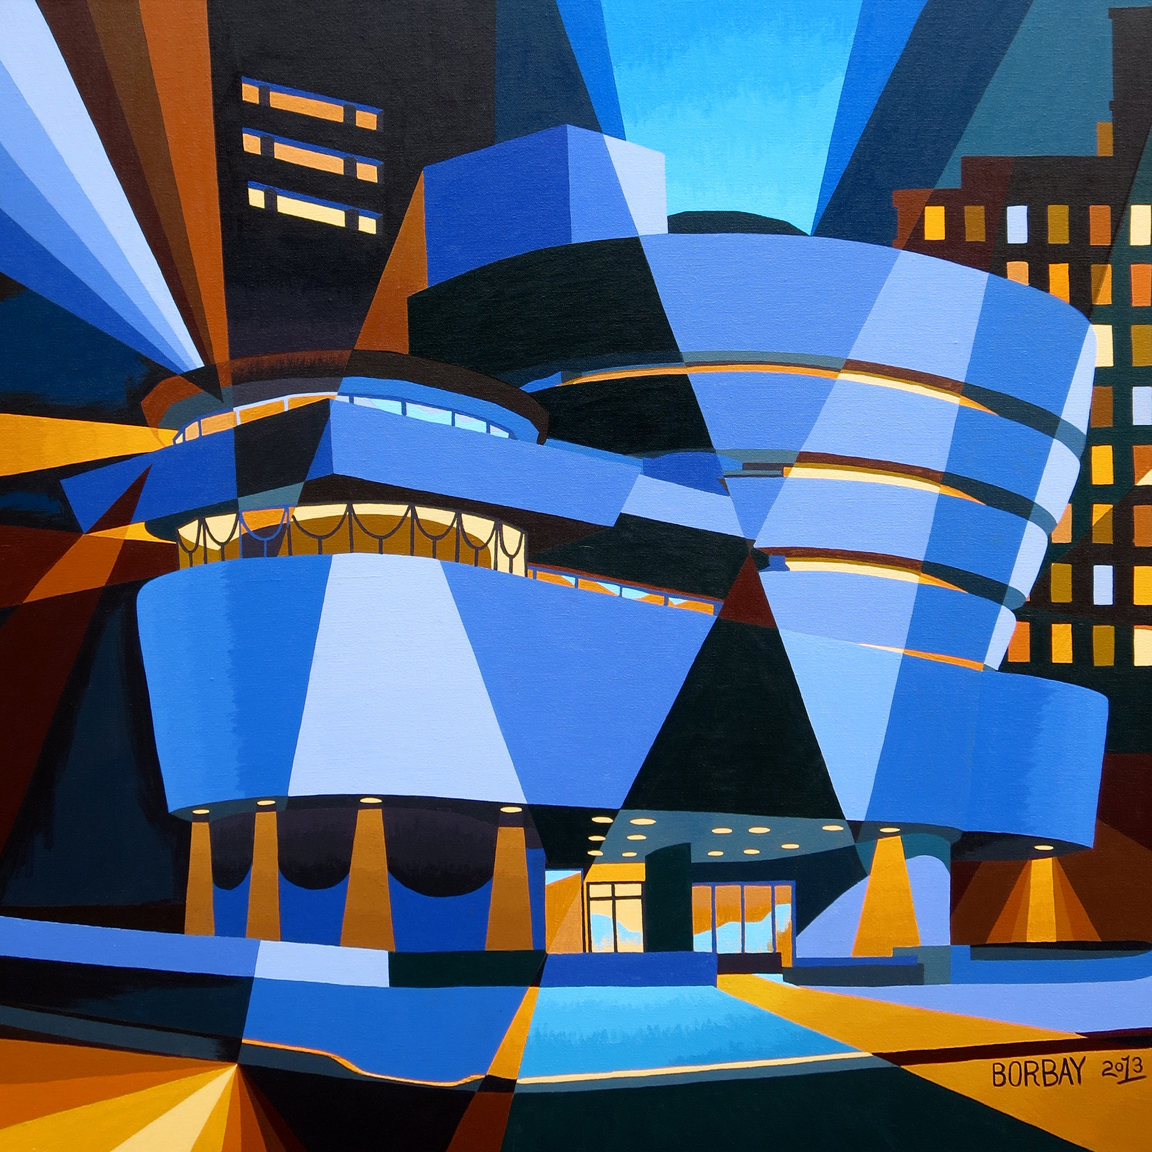 Guggenheim 5 In The Guggenheim For 20 Years Series Borbay